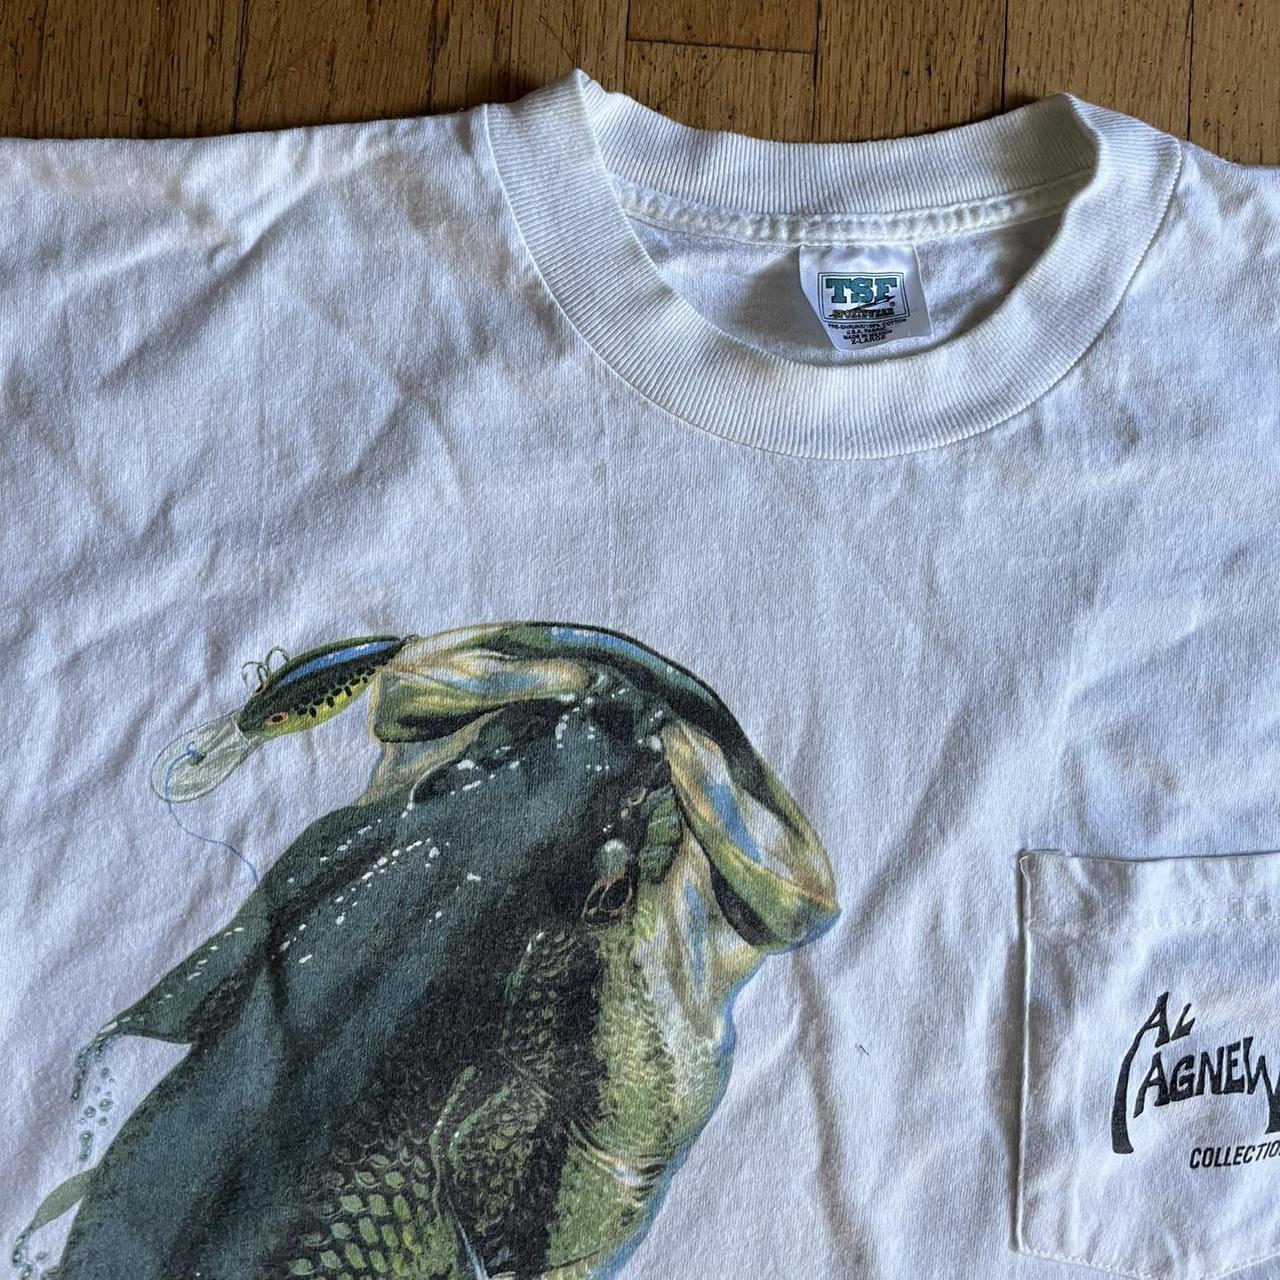 Al Agnew Fish Shirt, Tagged XL, Fits a little more